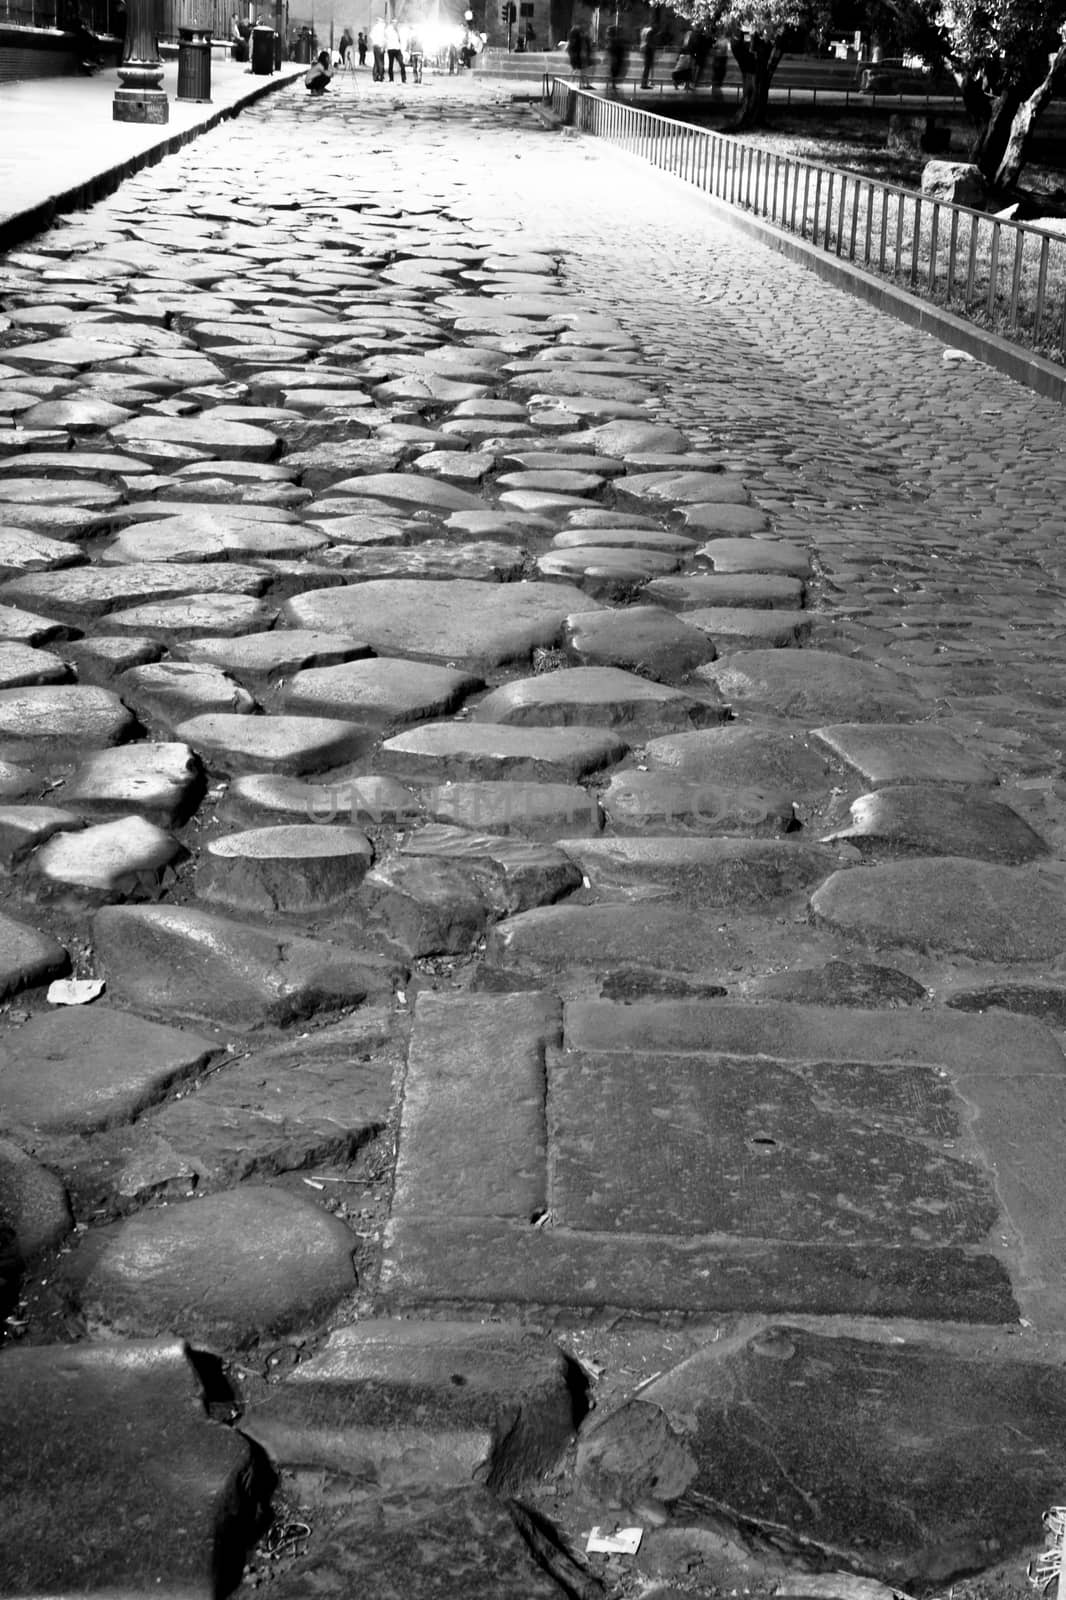 Roman road with cobblestones